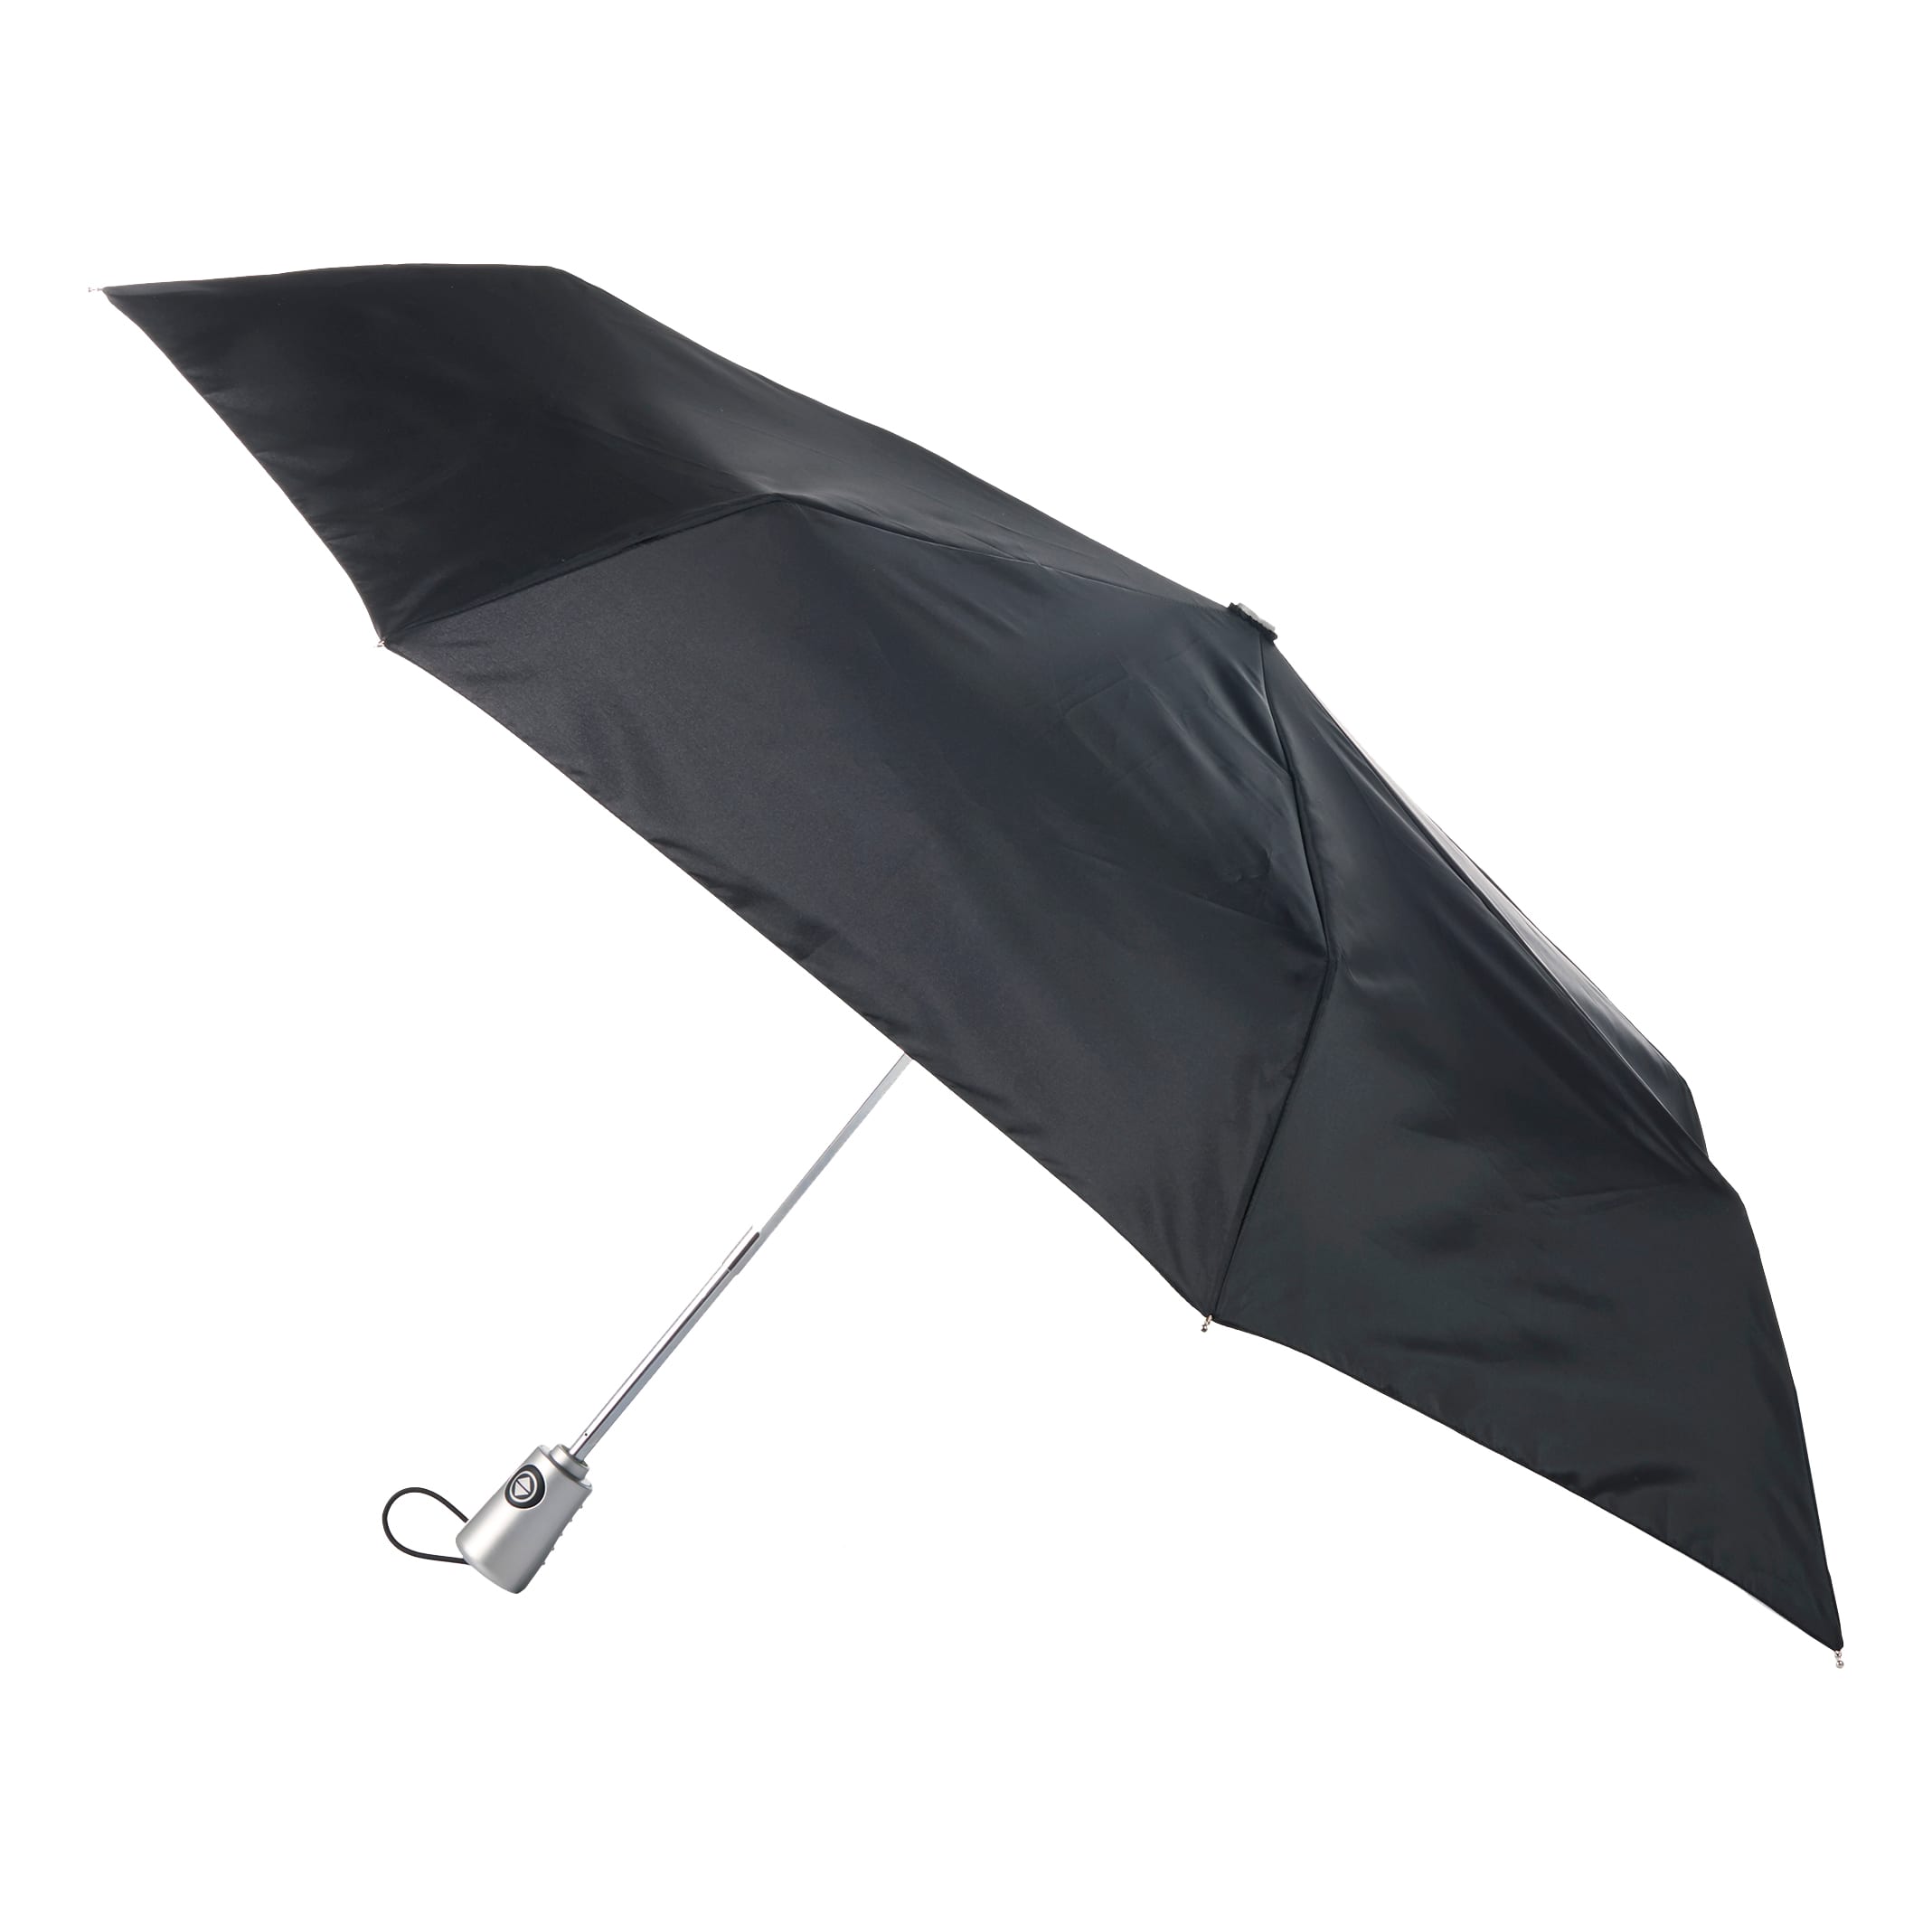 Totes Auto Open Auto Close Compact NeverWet® Umbrella - Black